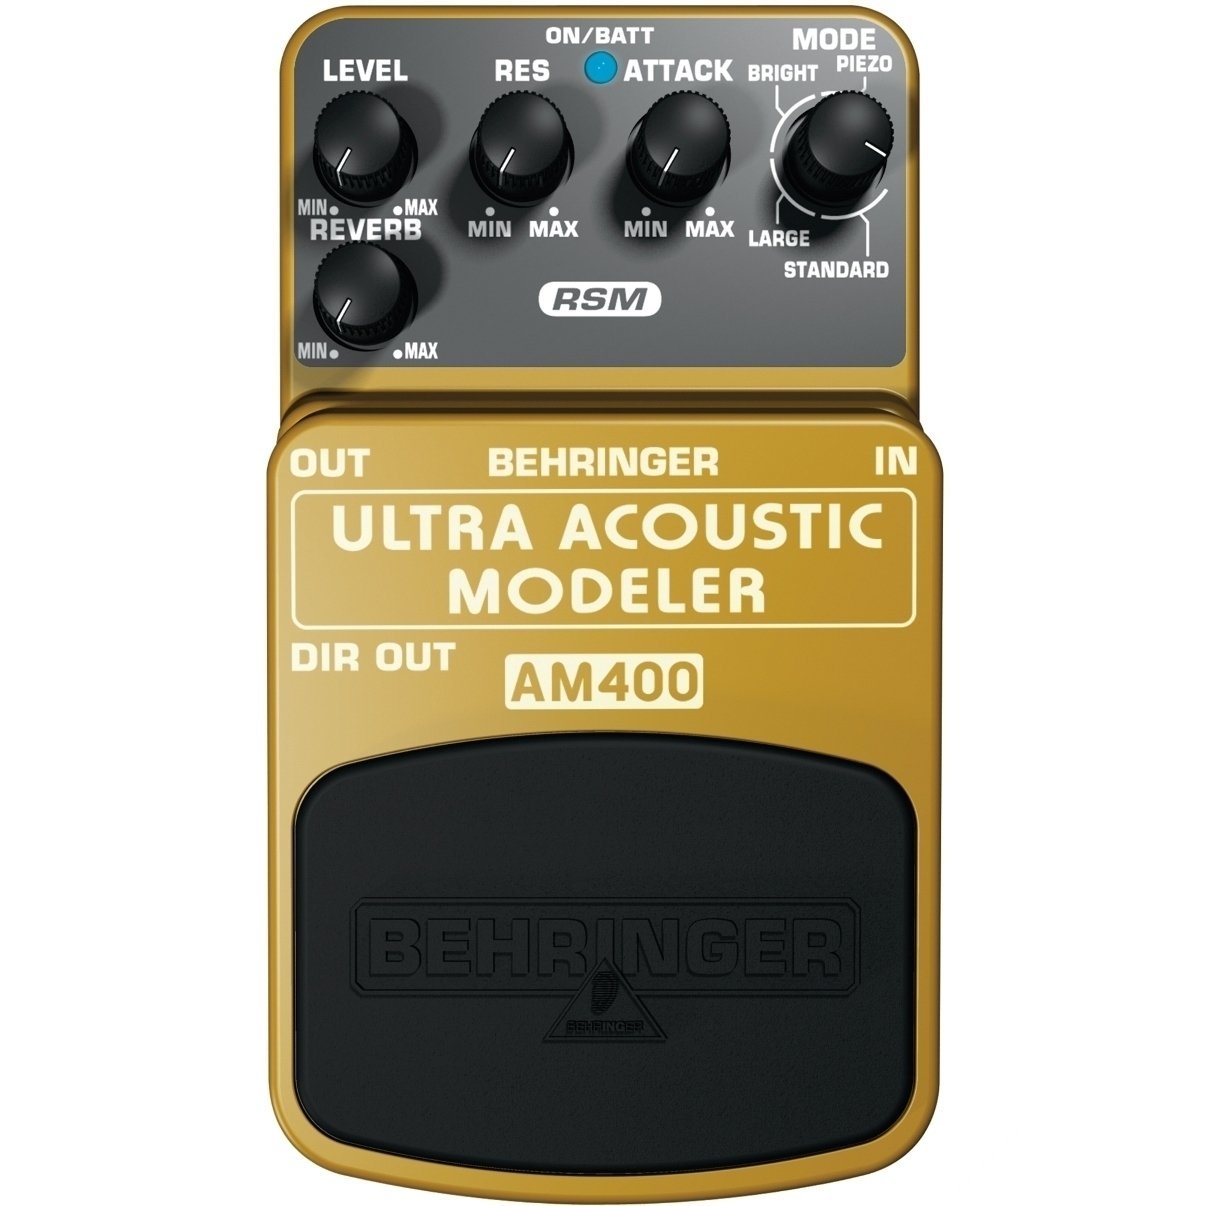 Pedal de efeitos para guitarra Behringer AM 400 ULTRA ACOUSTIC MODELER